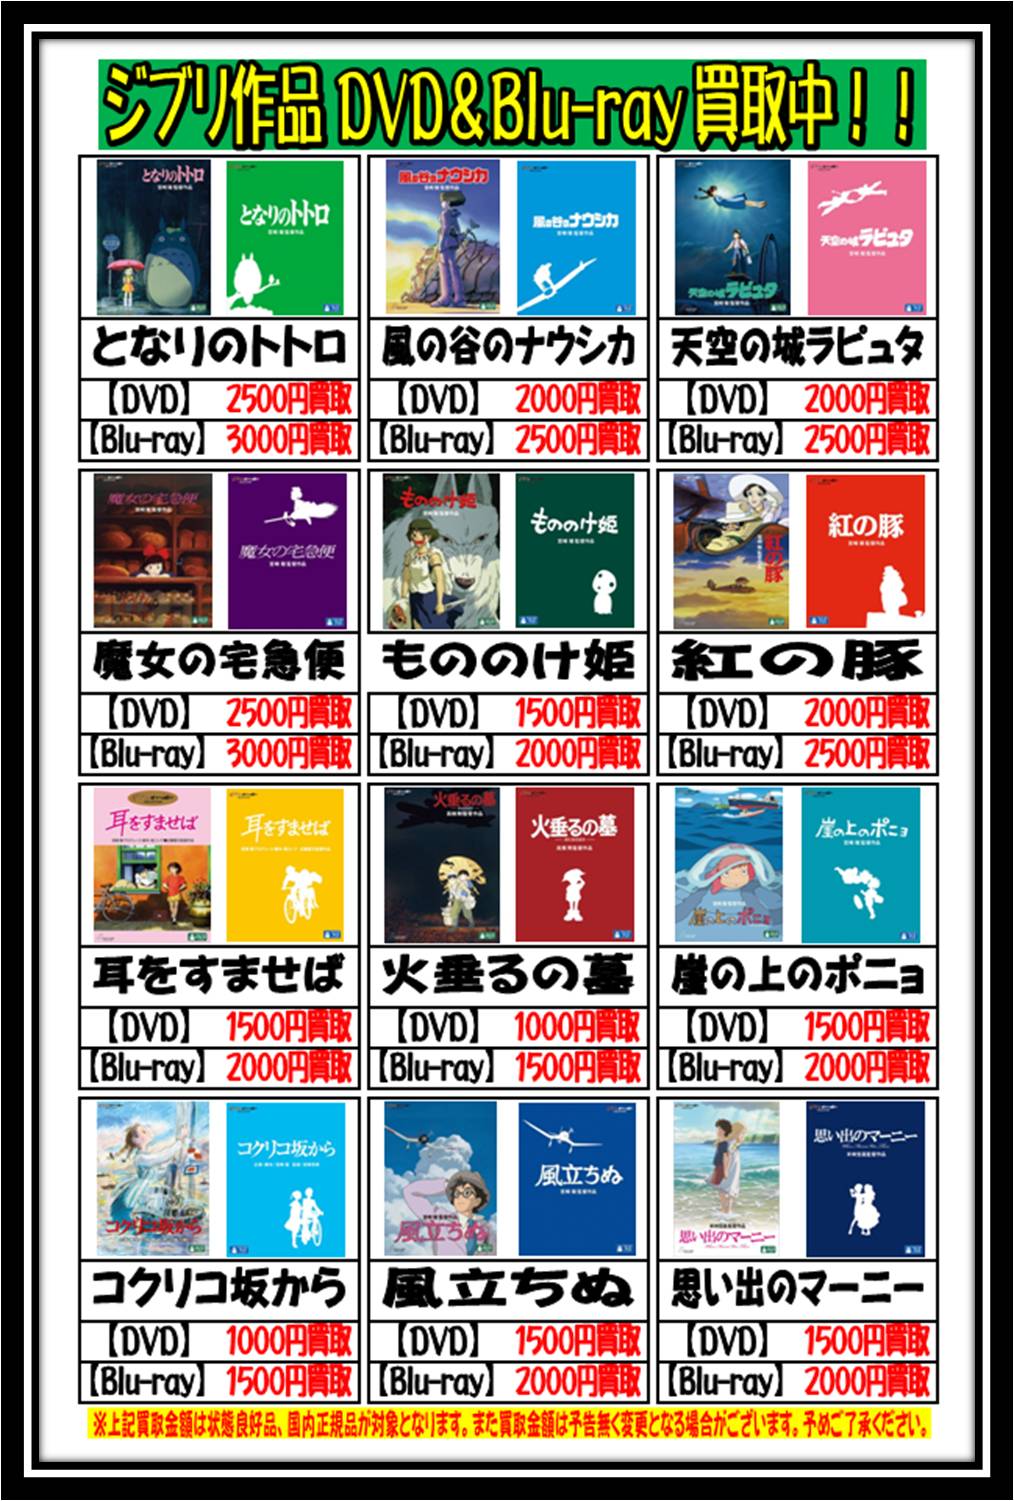 CD/DVD】3/15ジブリ作品高価買取中です！！ - 万代書店 高崎店